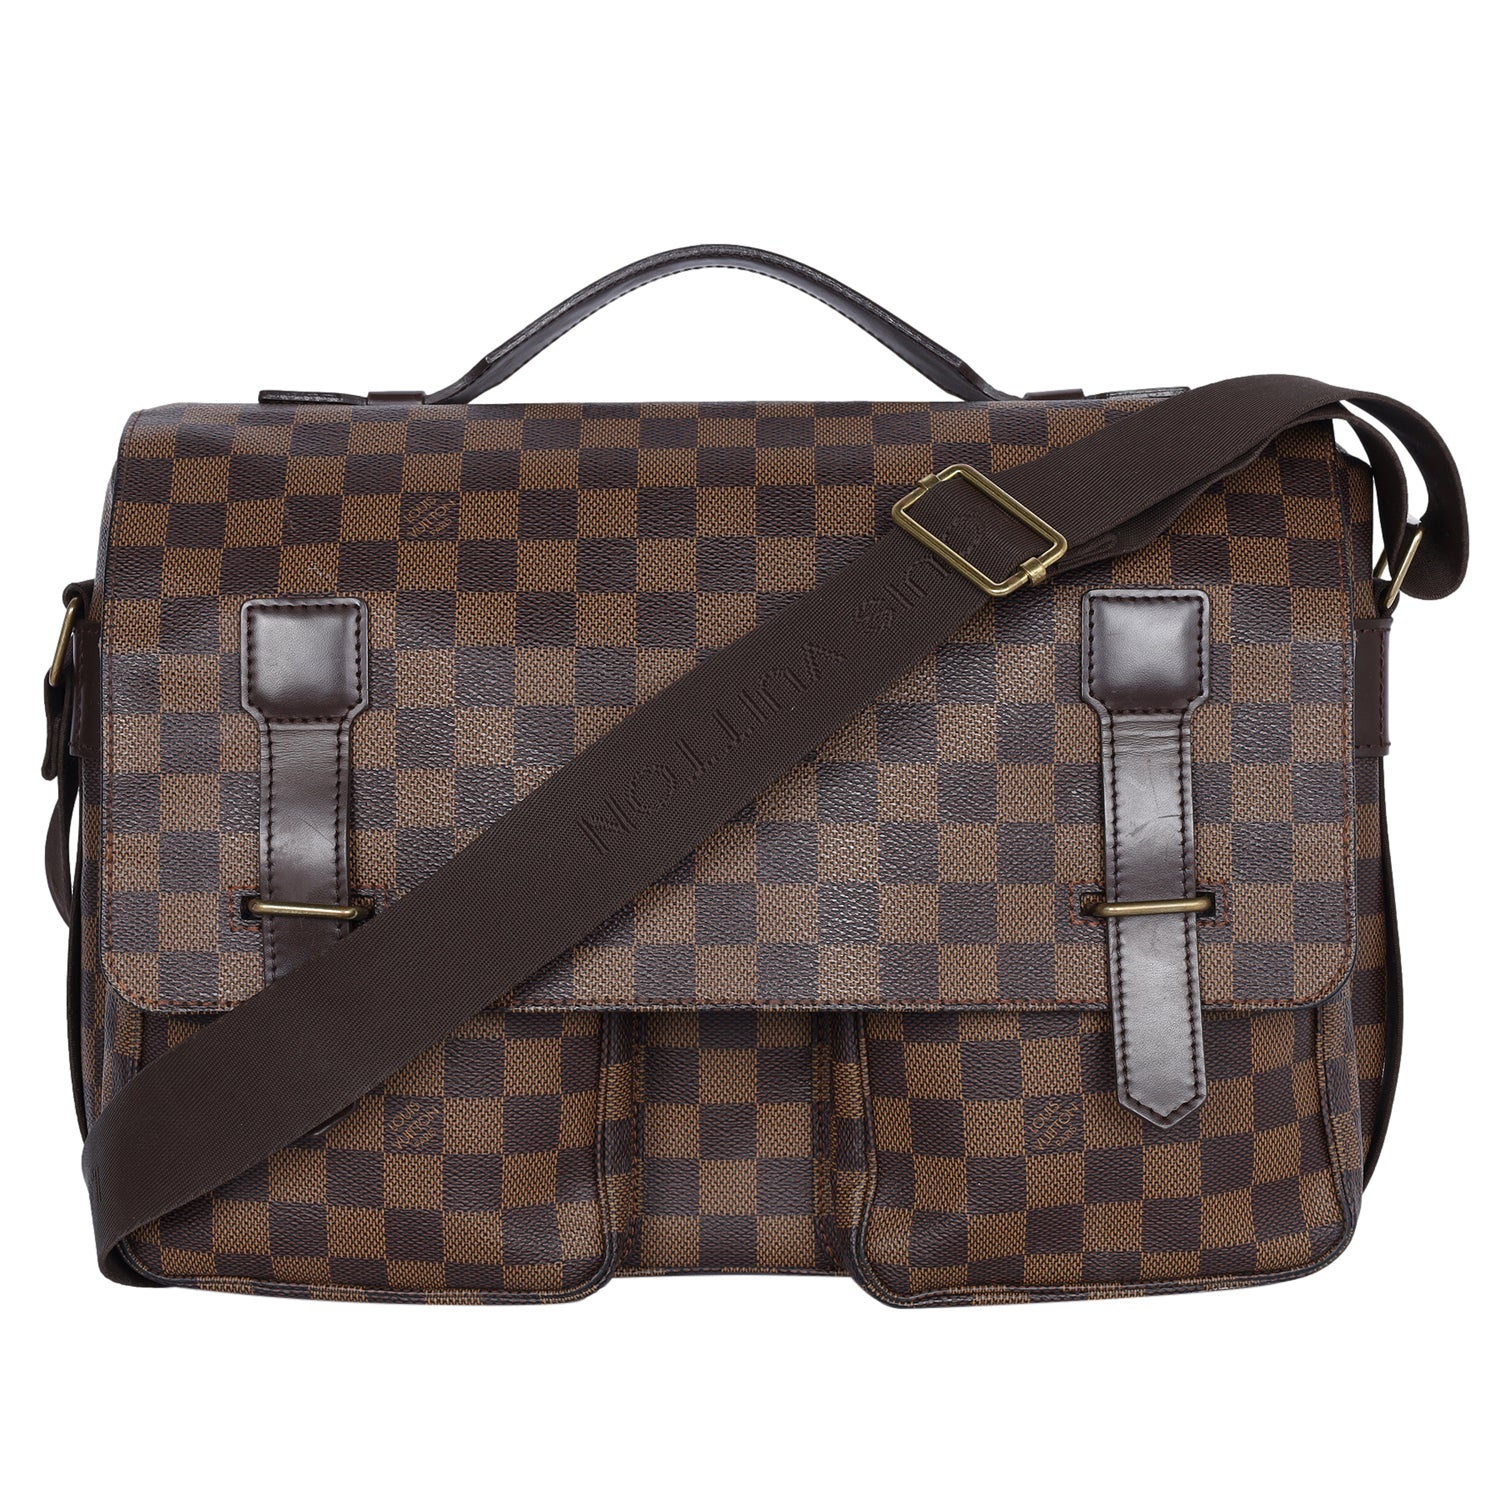 Louis Vuitton Damier Bags - Lv Damier Pre, Owned Bags